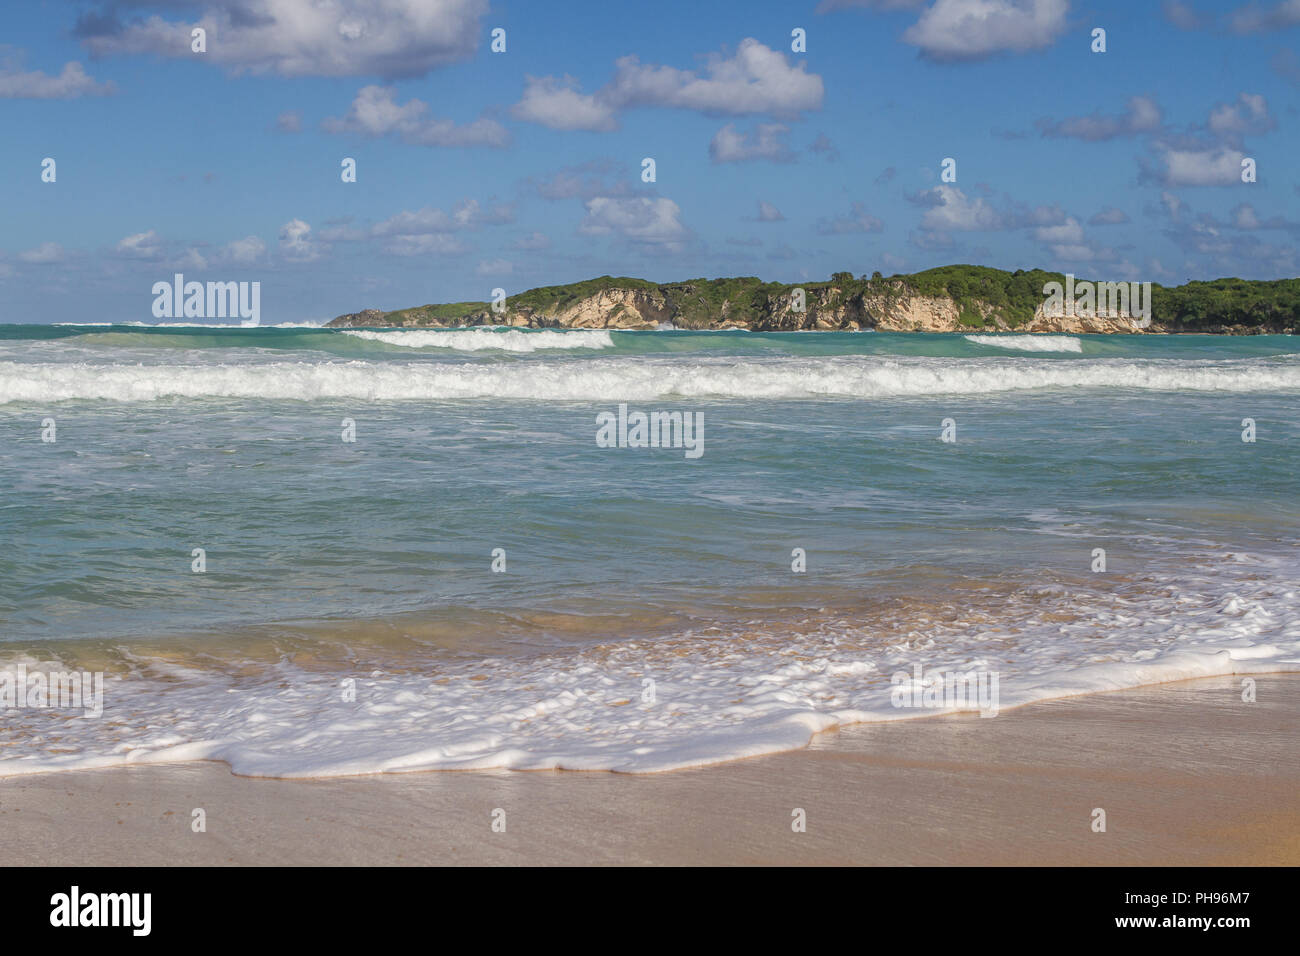 the coast with sandy beaches Stock Photo